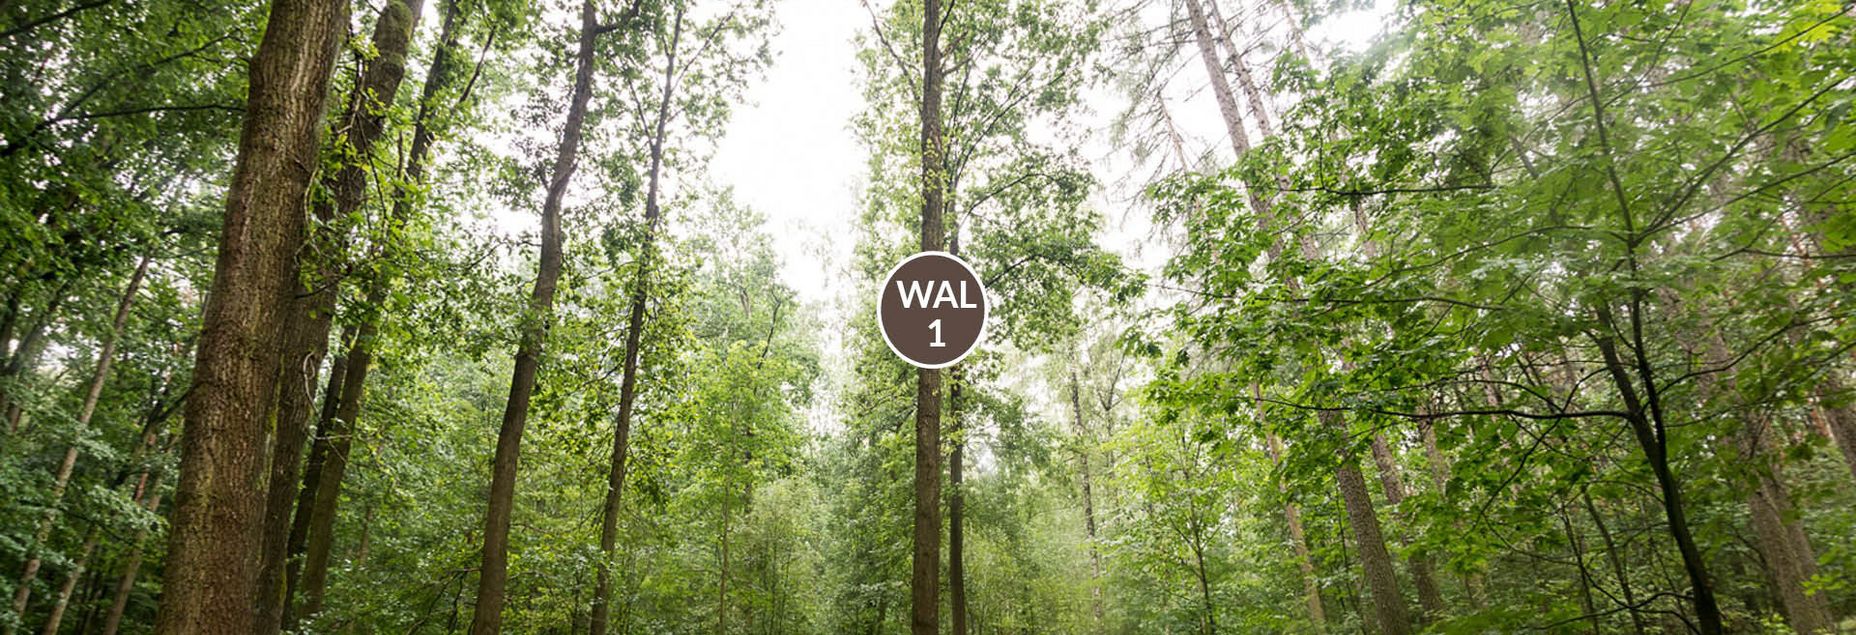 FriedWald-Onlineshop WAL 1